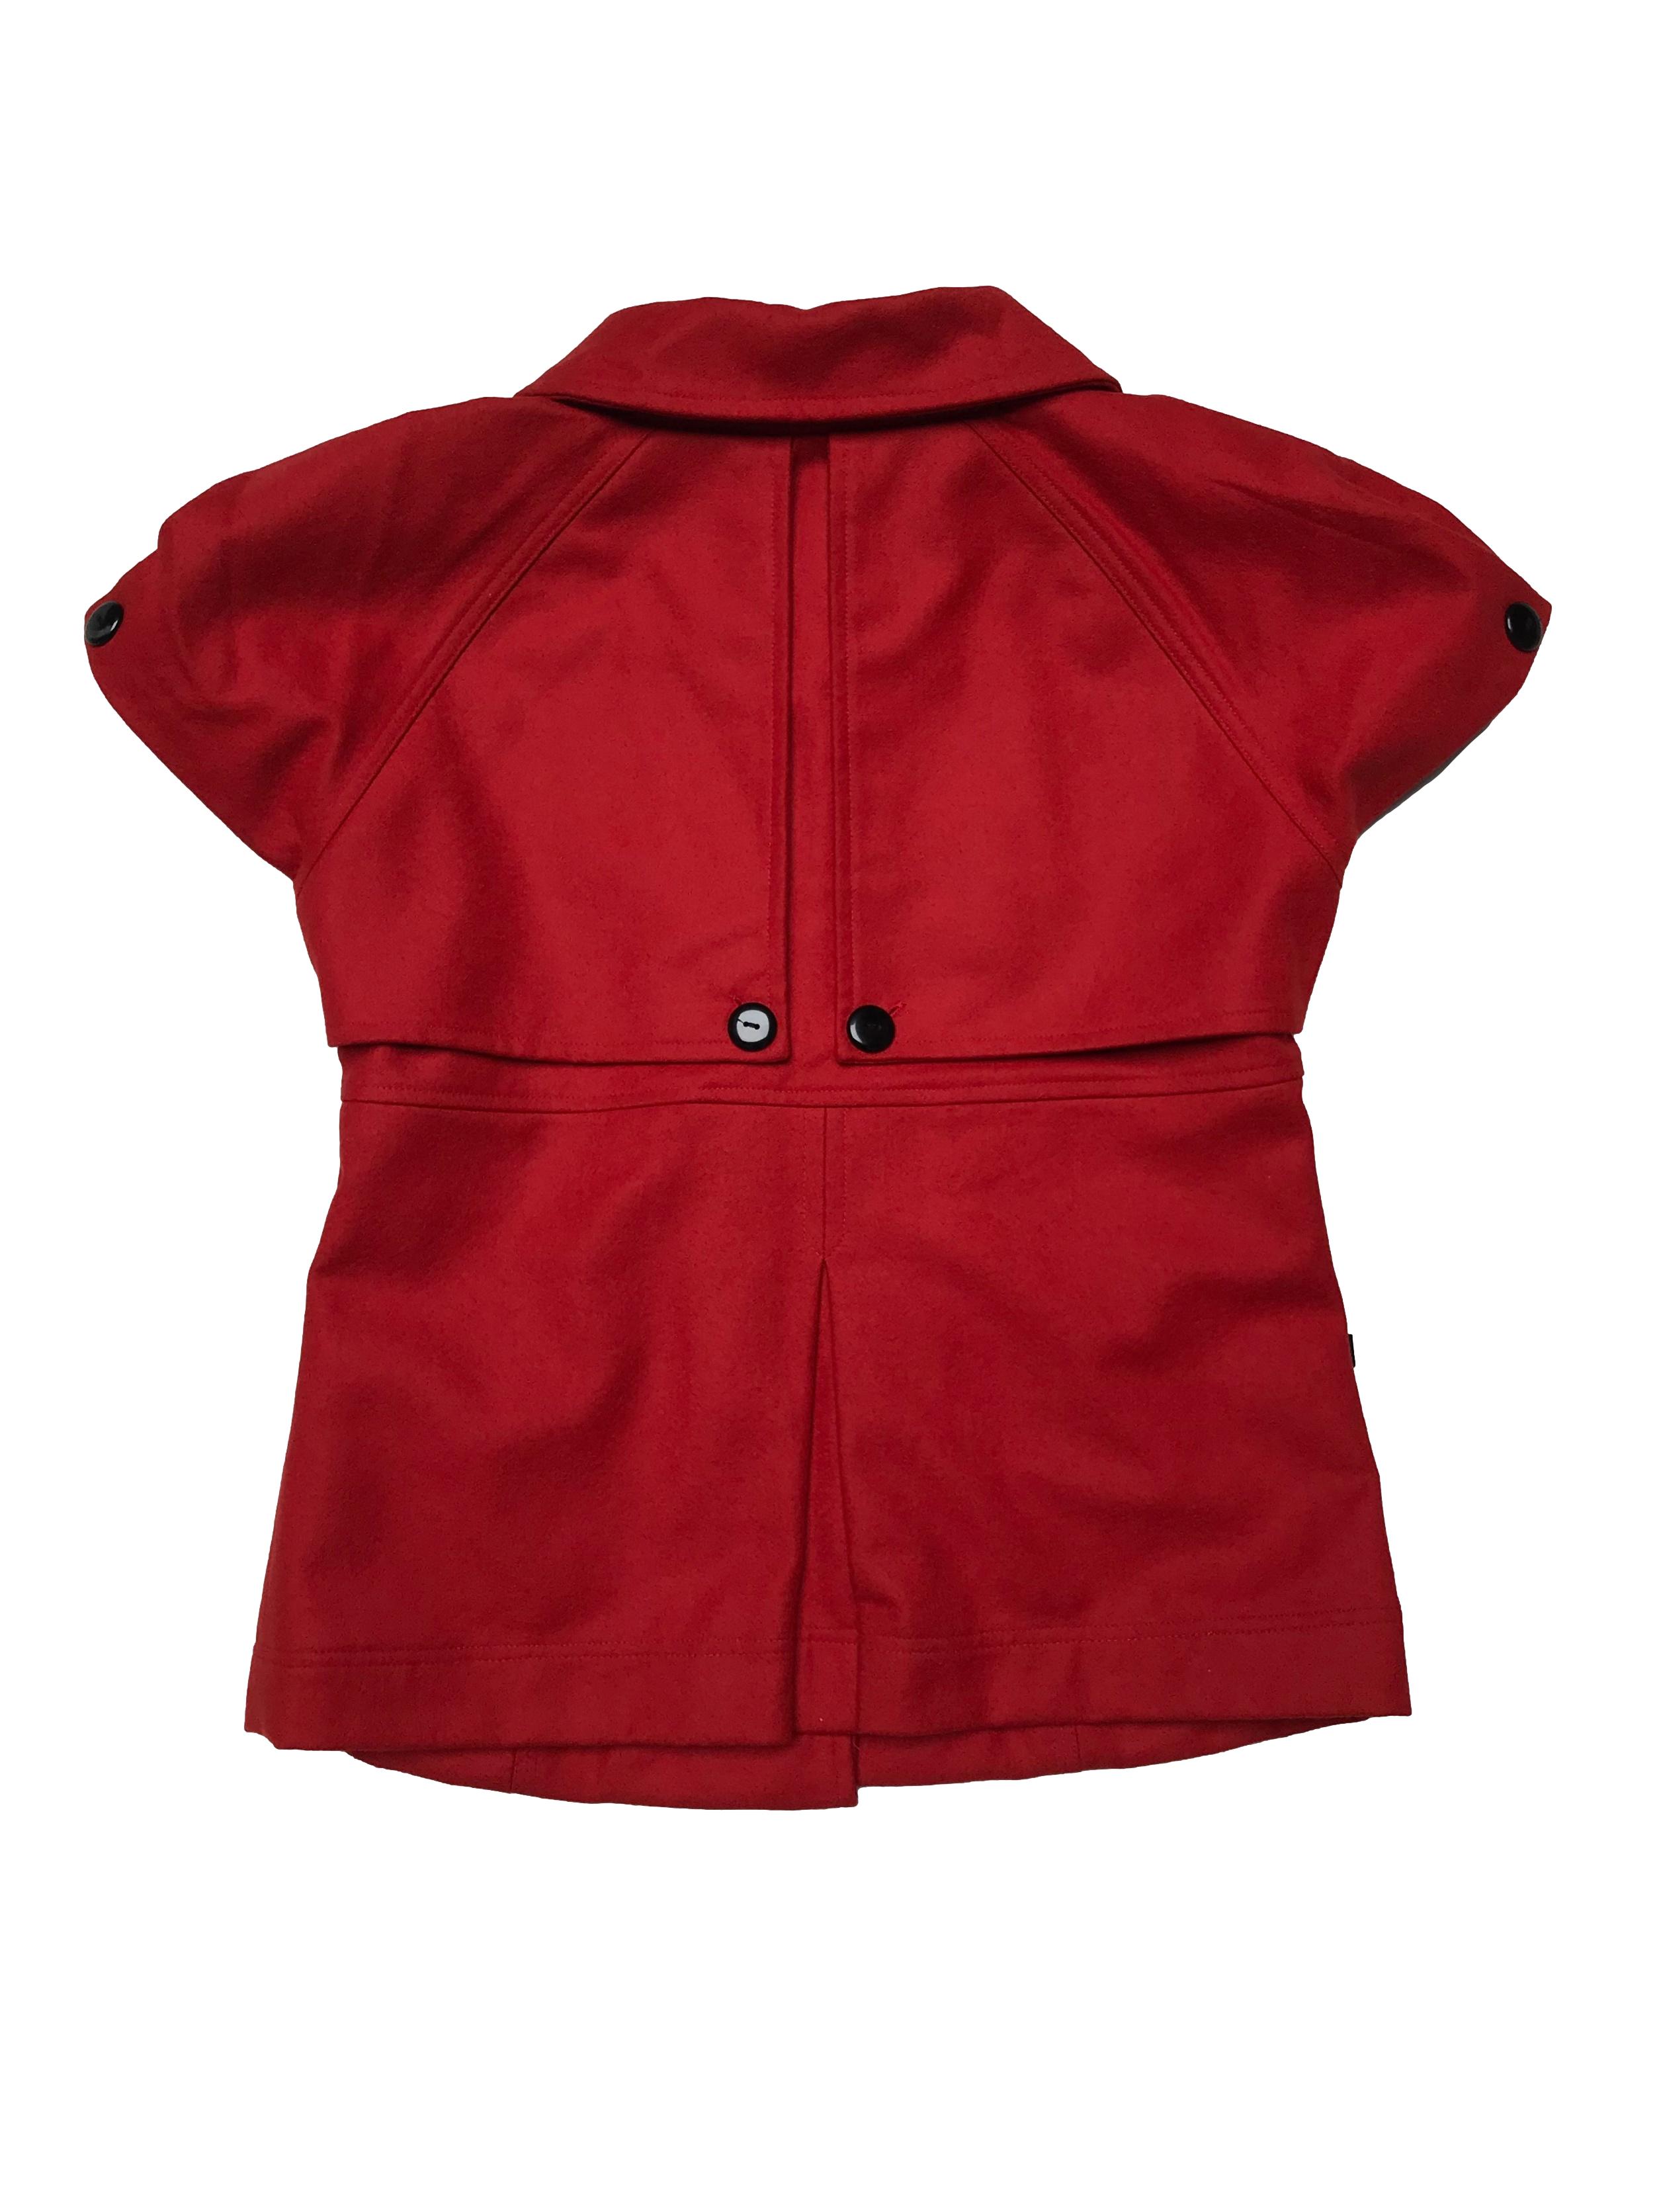 Saco de paño rojo, forrado, doble fila de botones, bolsillos lazo, espalda tipo capa con botones. Busto 97cm. Largo 60cm.